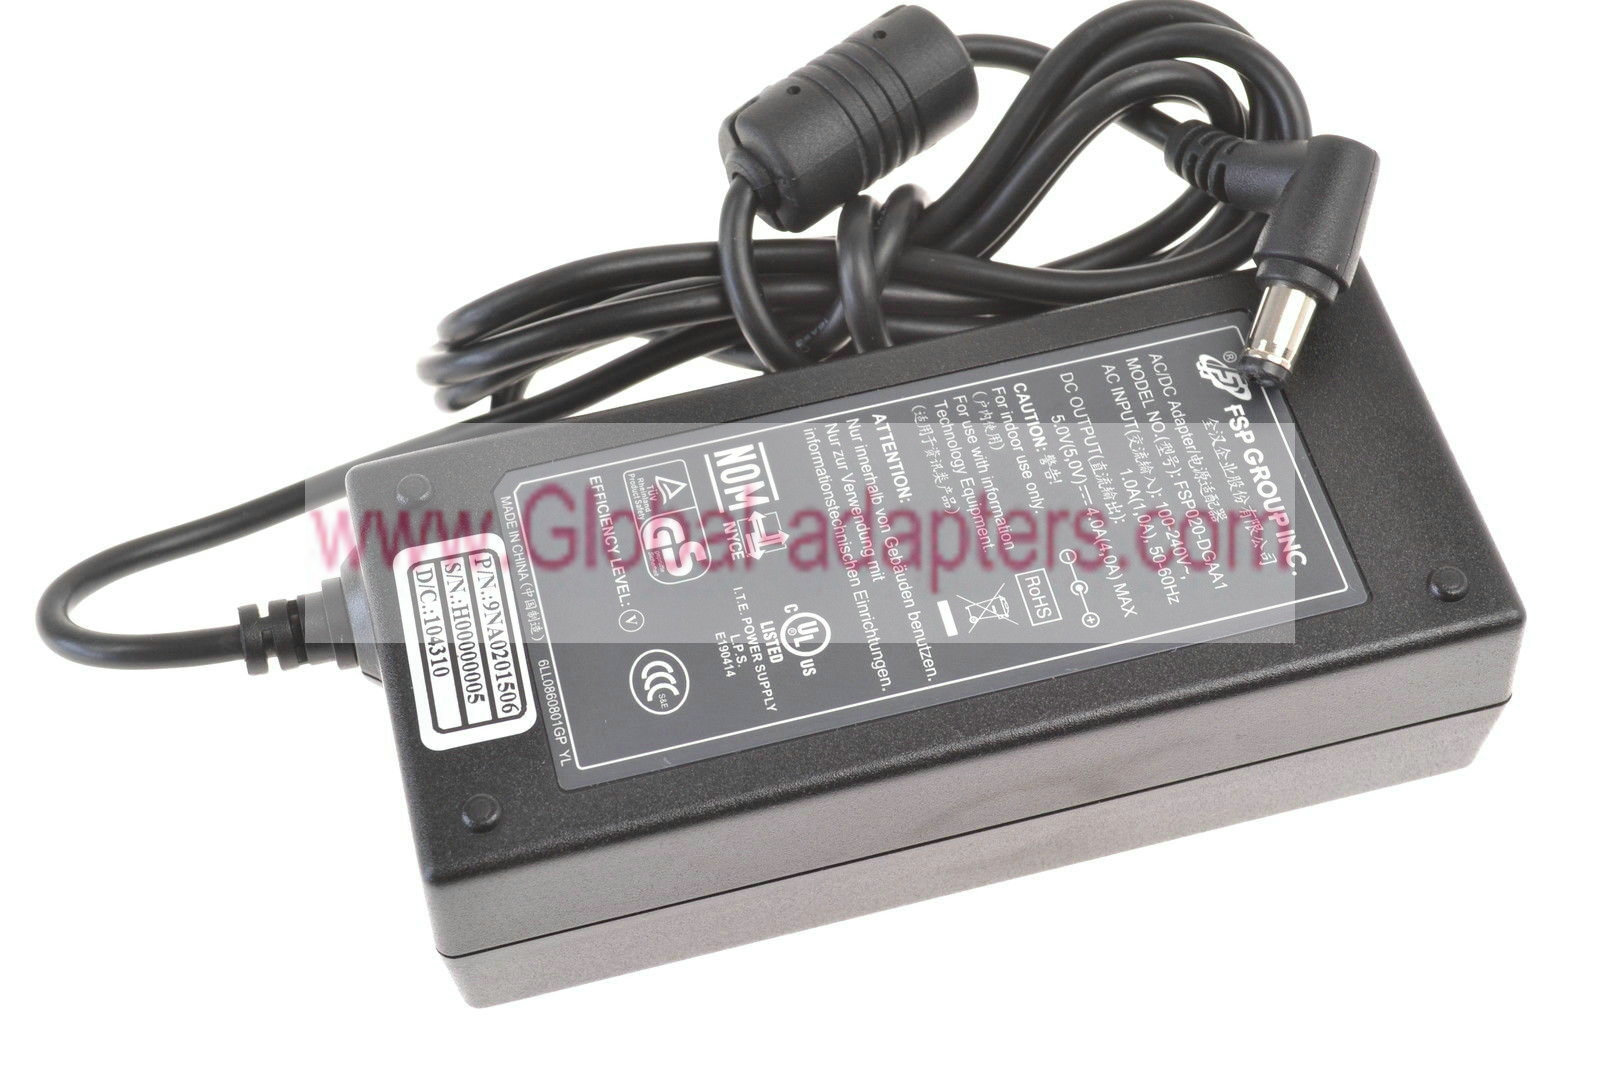 New Original FSP Group FSP020-DGAA1 5.0V 4.0A AC/DC Adapter power charger